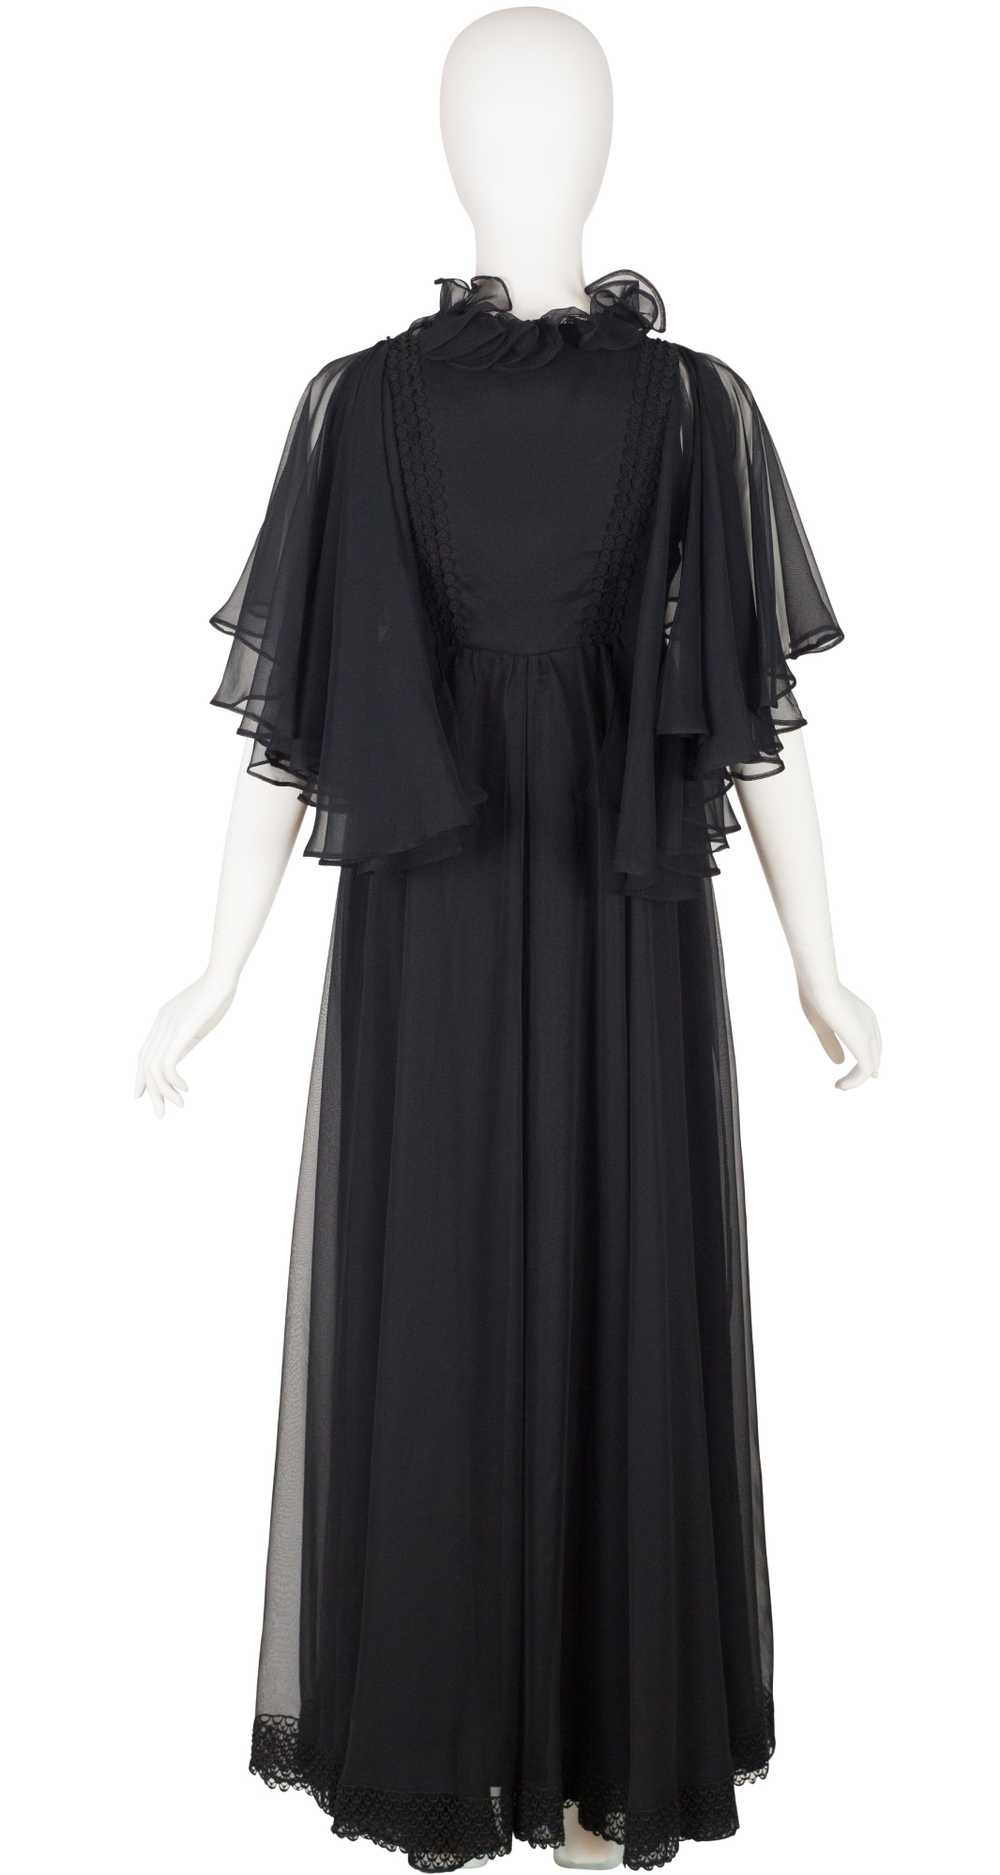 Jean Varon 1970s Black Chiffon Ruffle Evening Gown - image 2